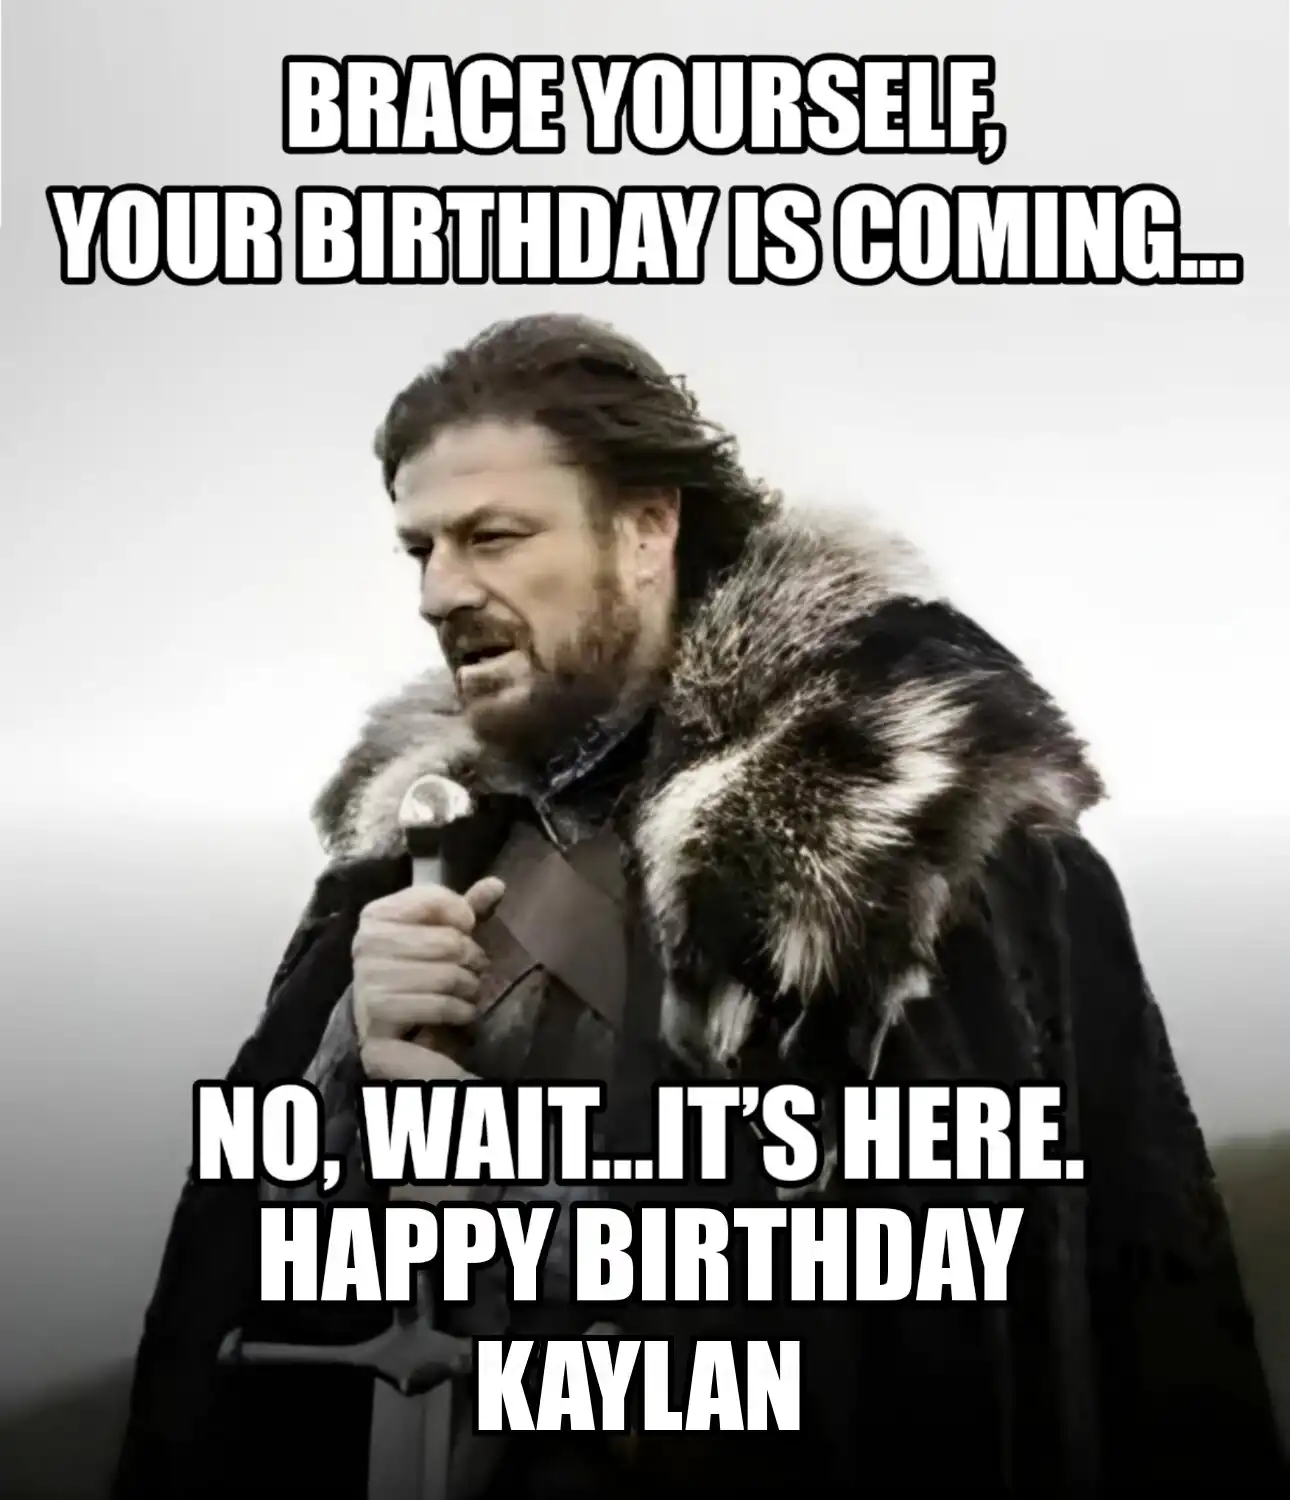 Happy Birthday Kaylan Brace Yourself Your Birthday Is Coming Meme